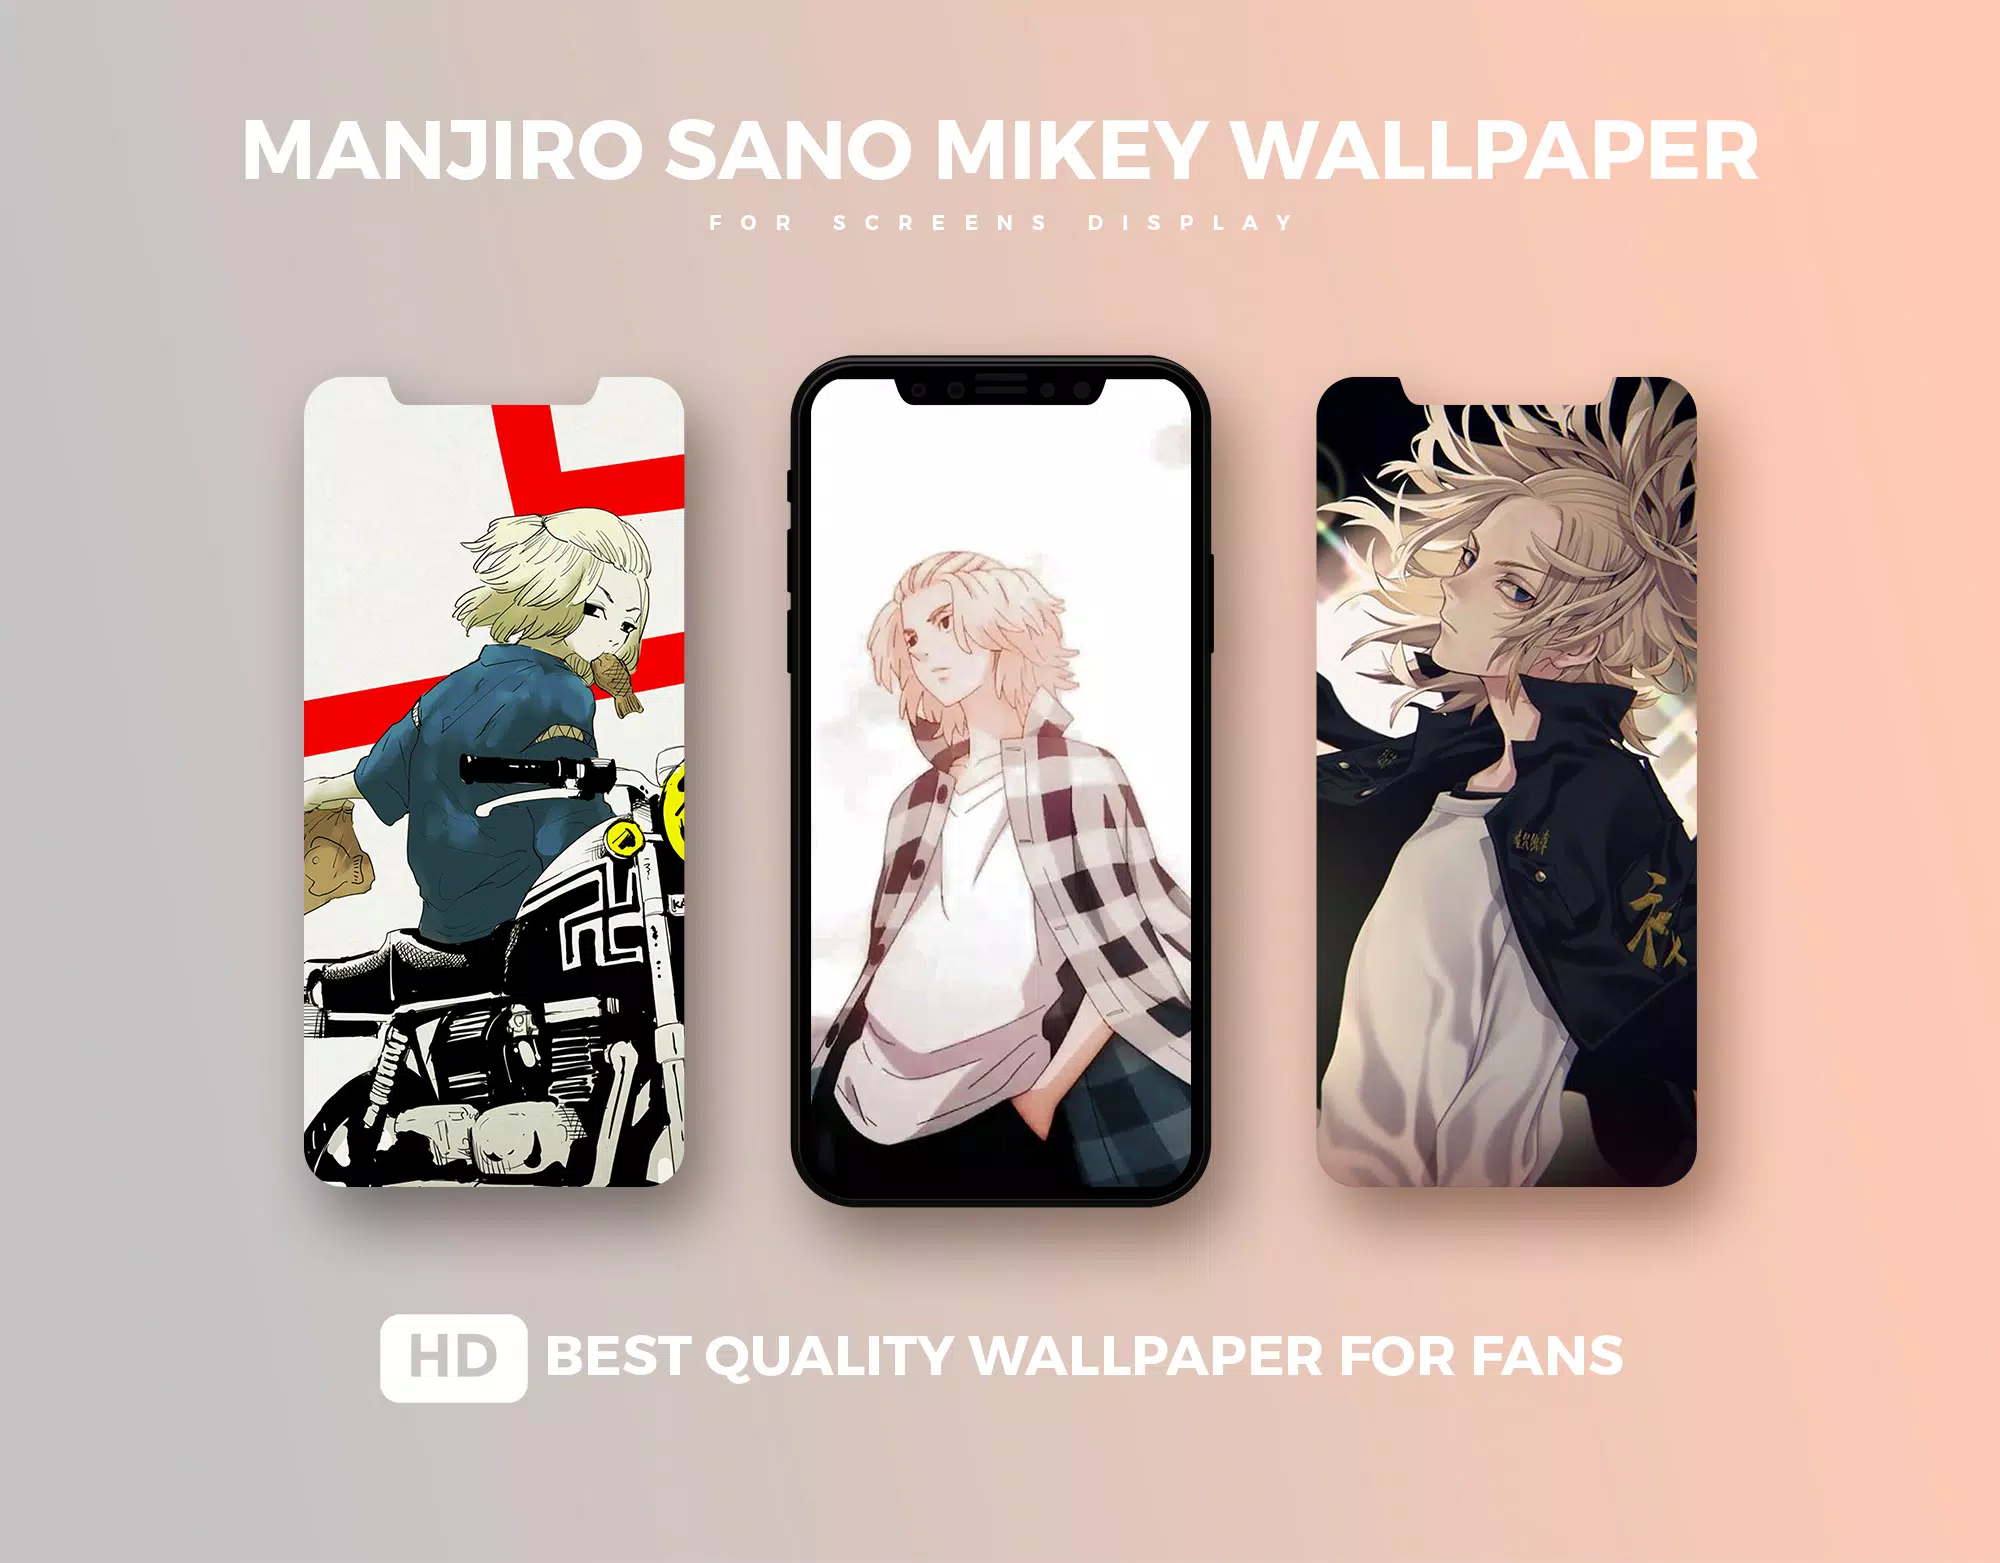 Manjiro sano wallpaper